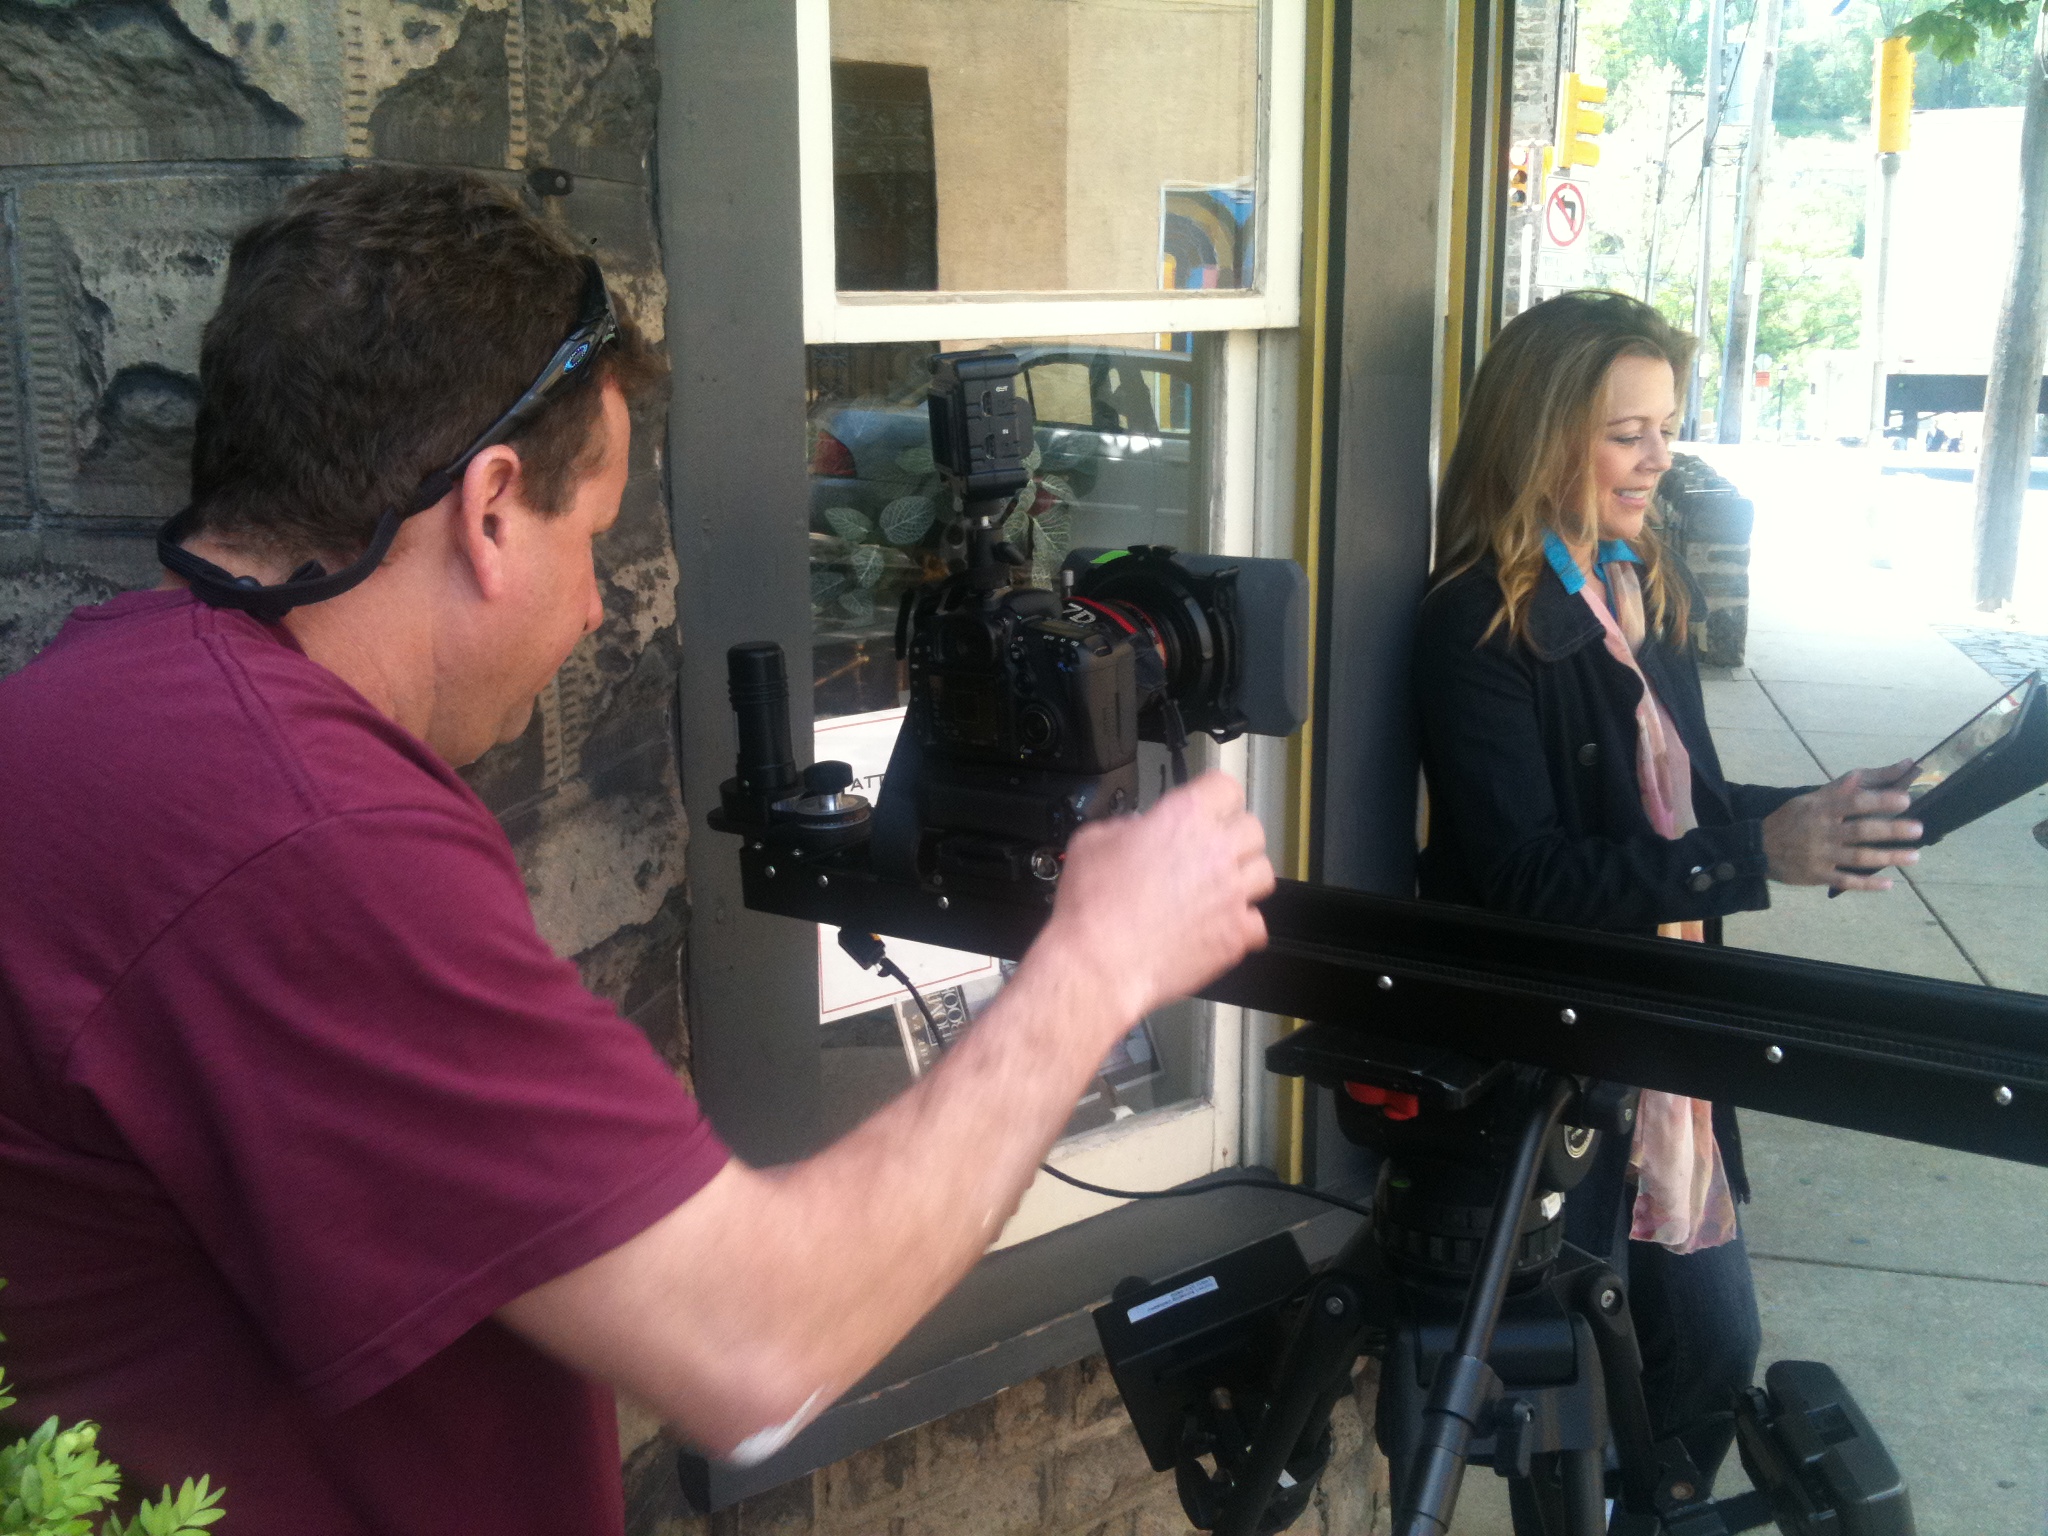 Still image of Jodie Shultz on set filming for ToonUps via Facebook.